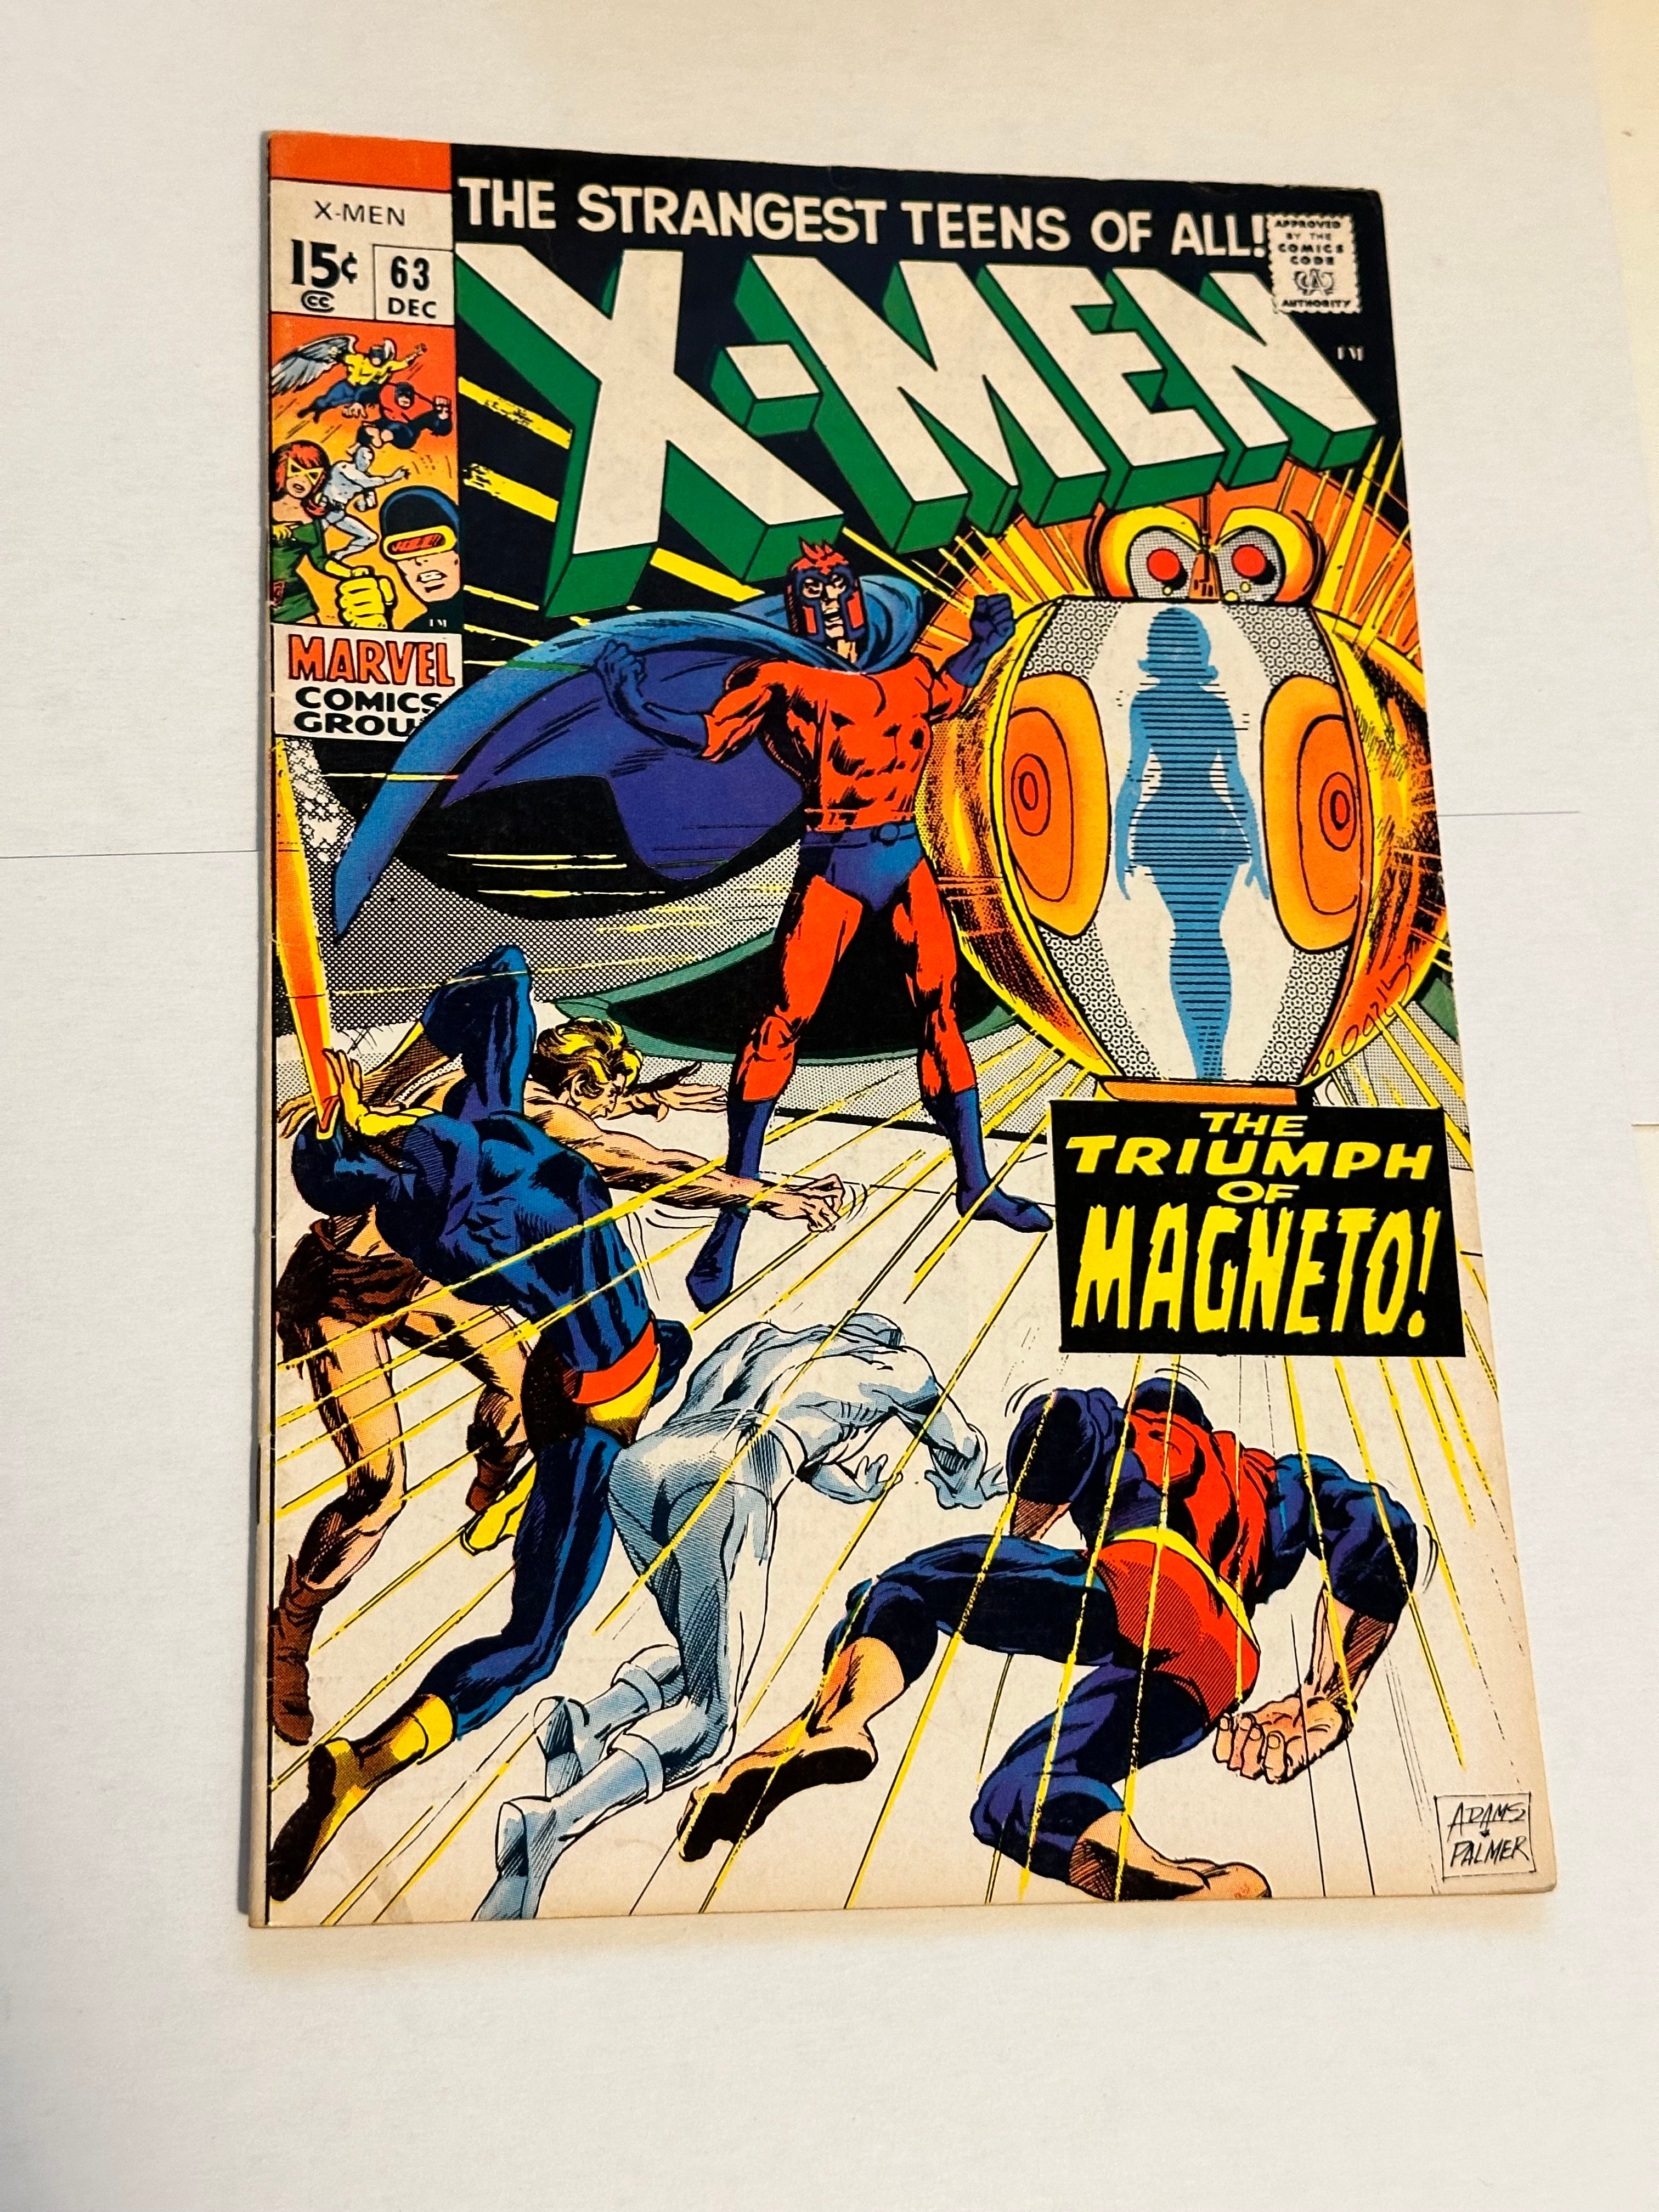 X-Men #63 Vf or better condition Niel Adams art comic book 1969